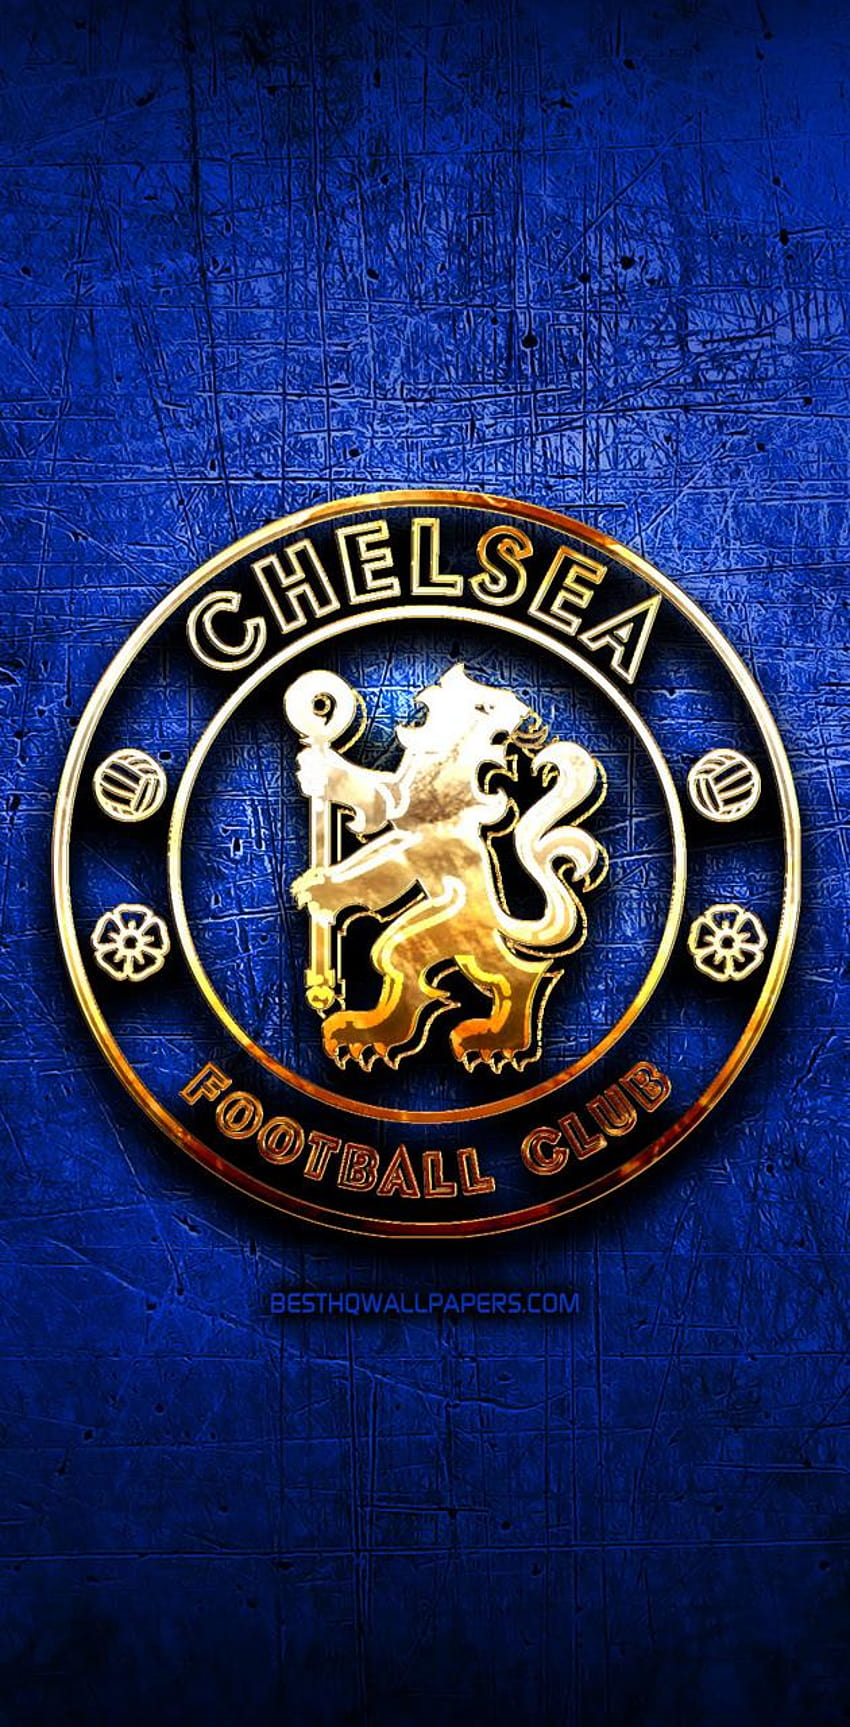 Chelsea FC de Elnaz Tajaddod fondo de pantalla del teléfono